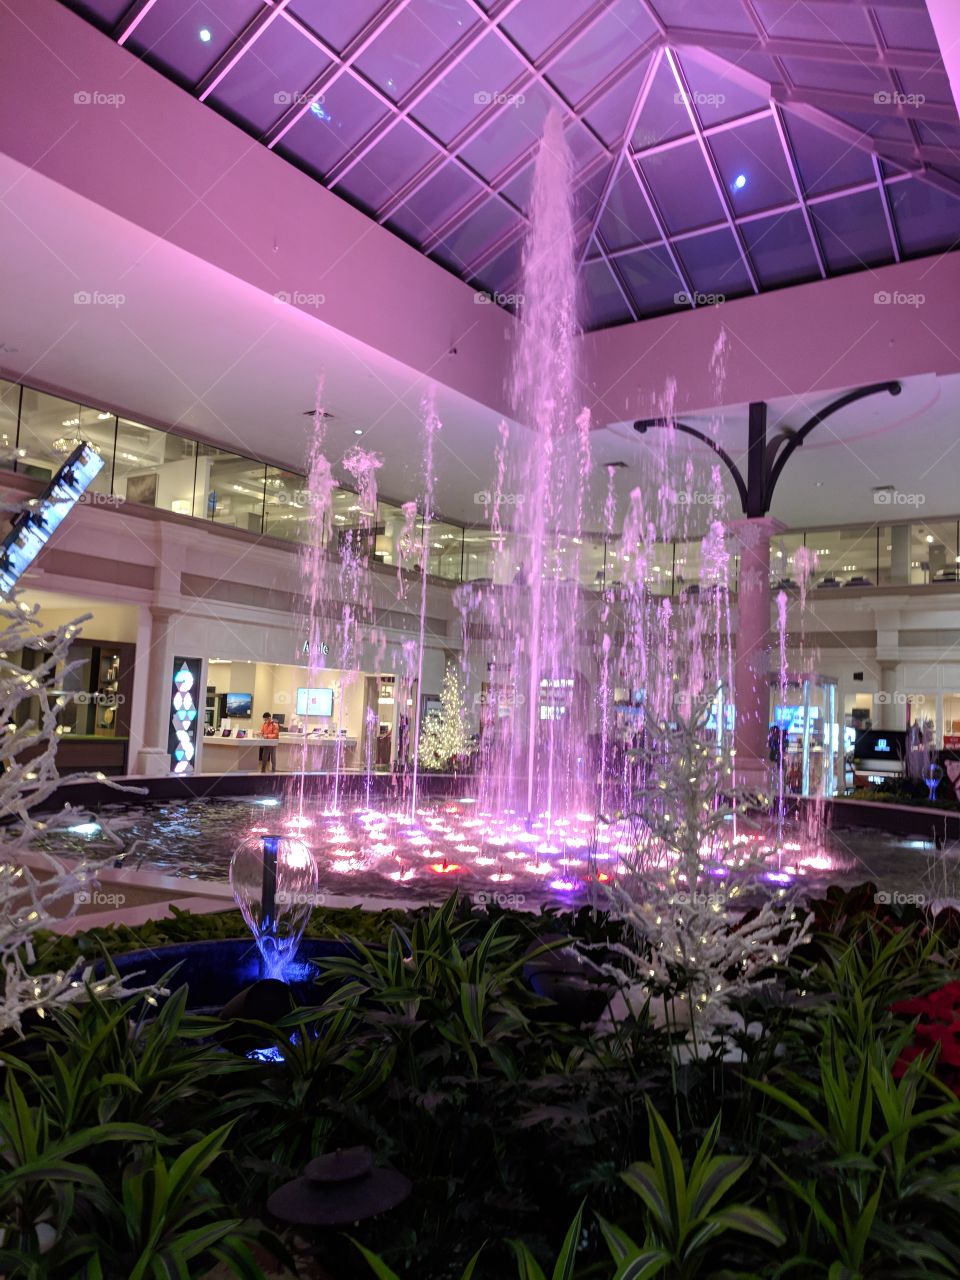 A beautiful indoor fountain